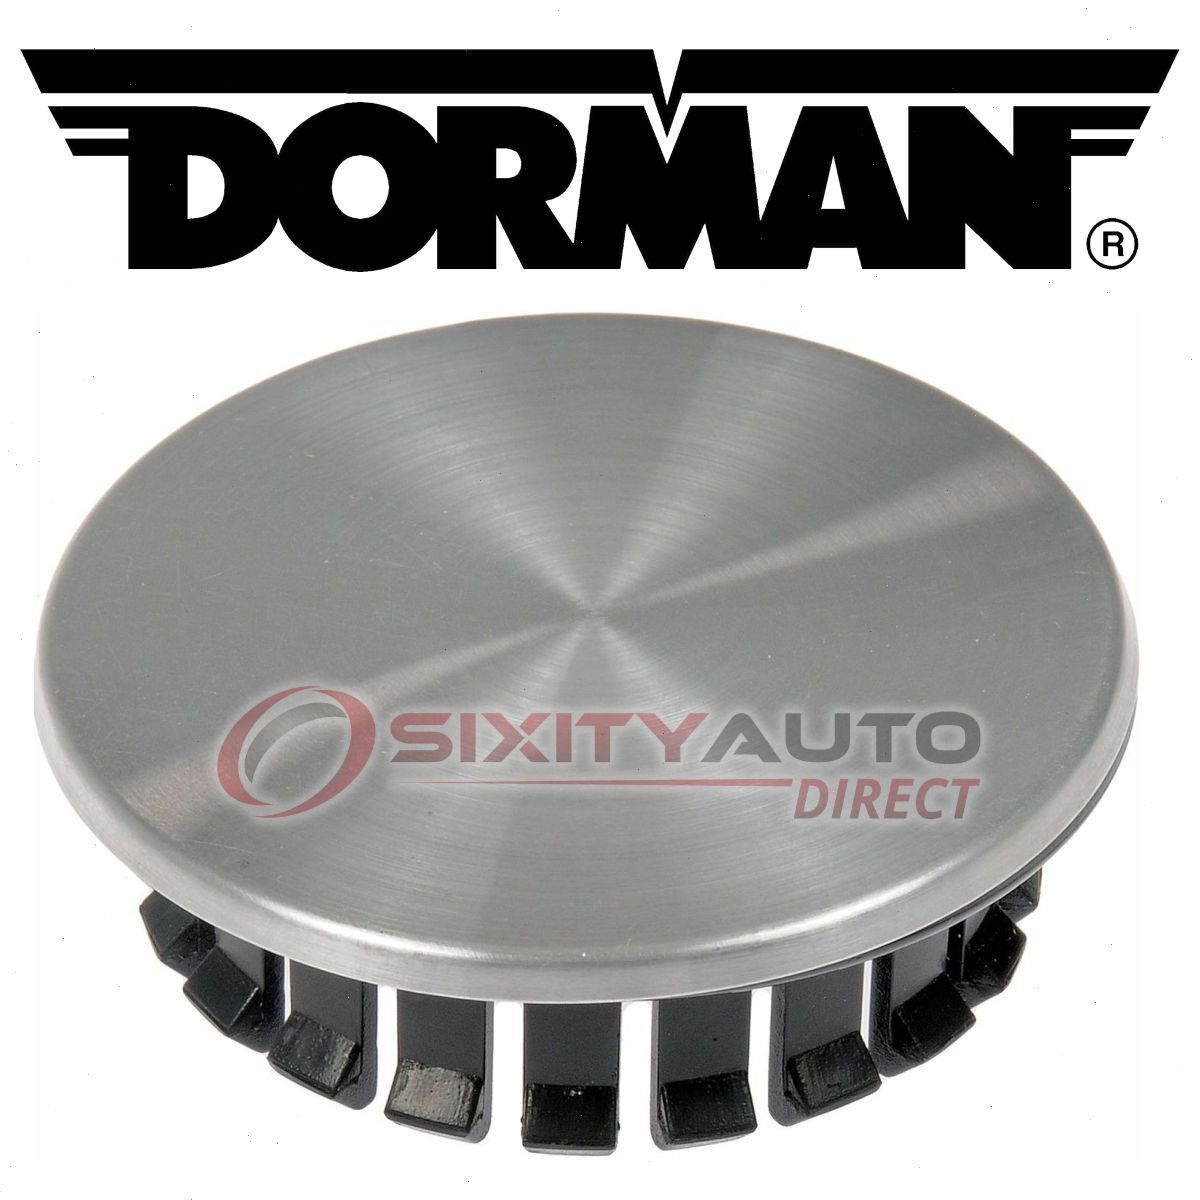 Dorman Wheel Cap for 2006-2010 Chevrolet HHR Tire  ee